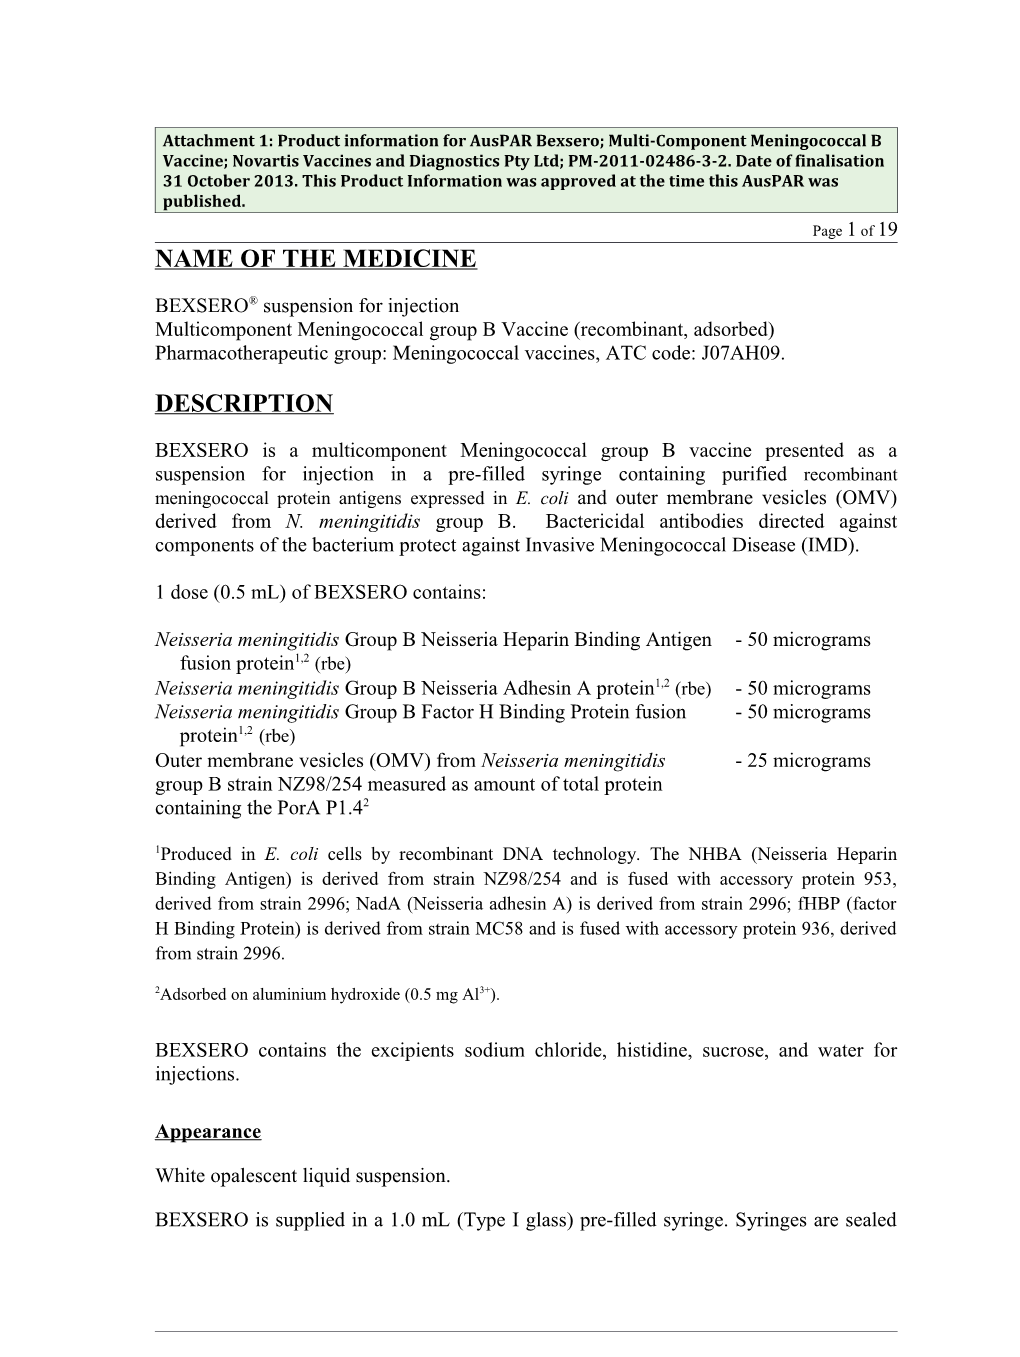 Auspar Attachment 1: Product Information for Multi-Component Meningococcal B Vaccine (Bexsero)